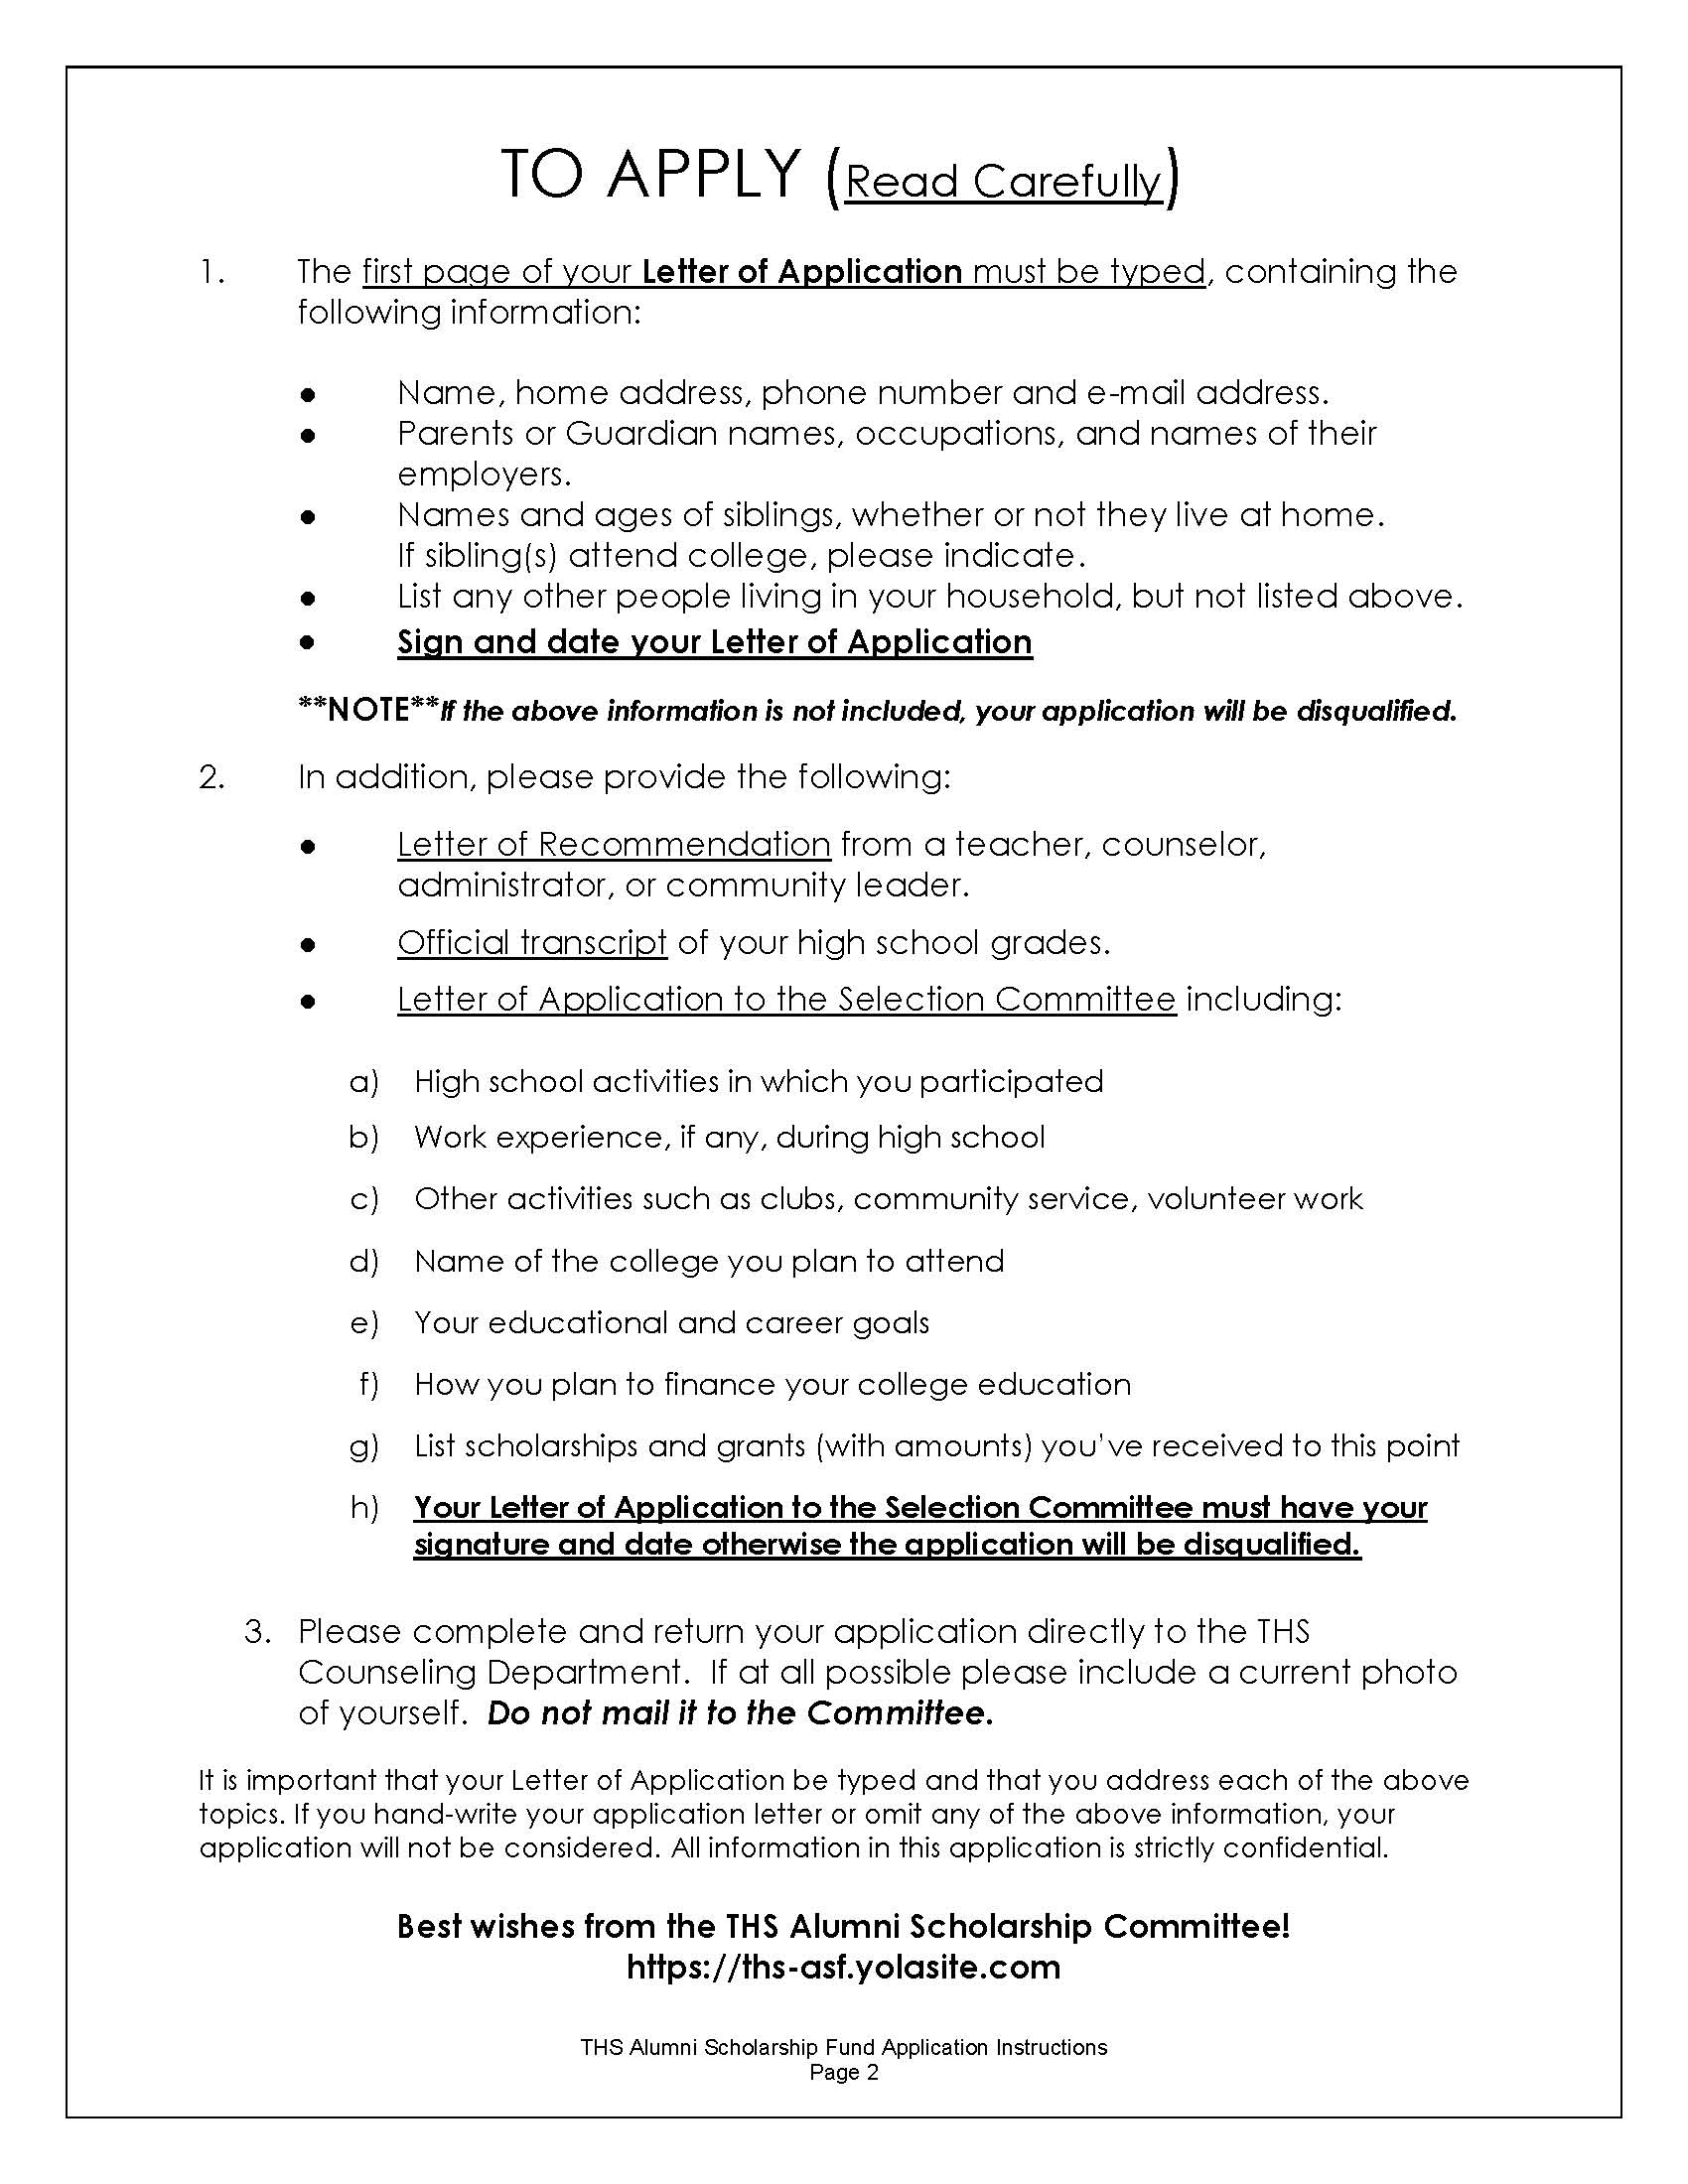 Graduate Application Instructions pg 2